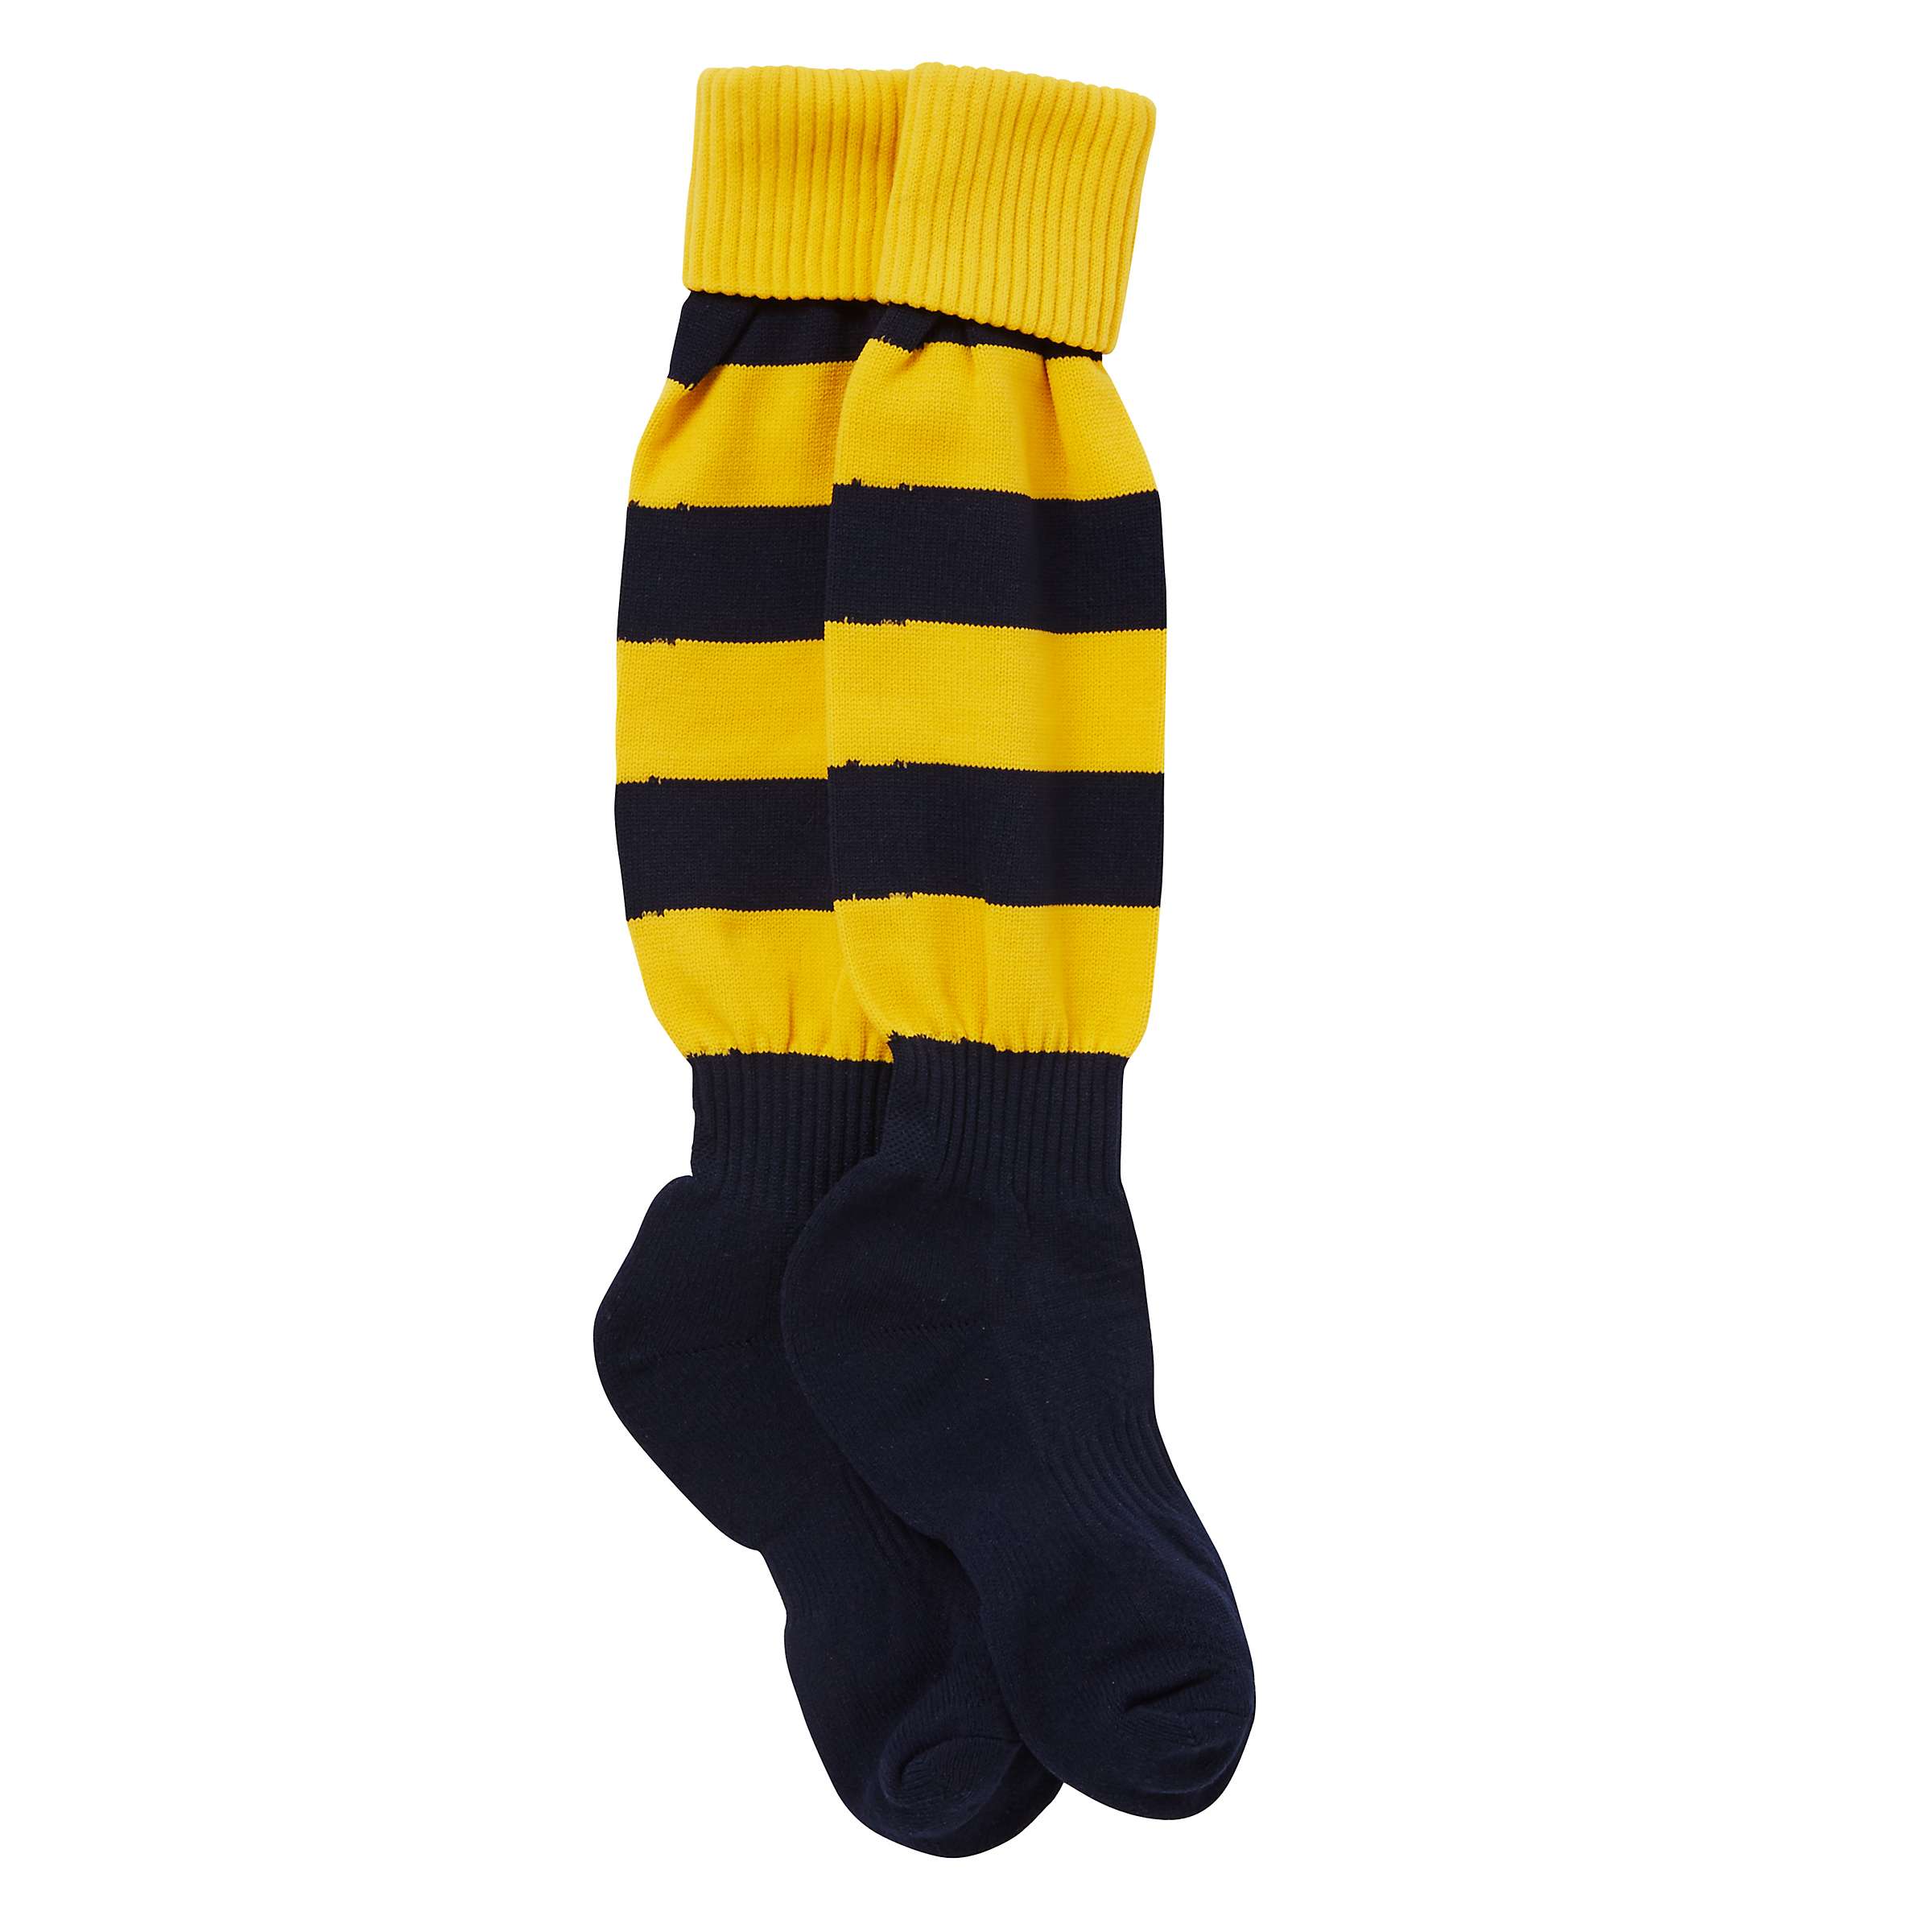 Buy Colfe's School Unisex Sports Socks, Navy/Yellow Online at johnlewis.com